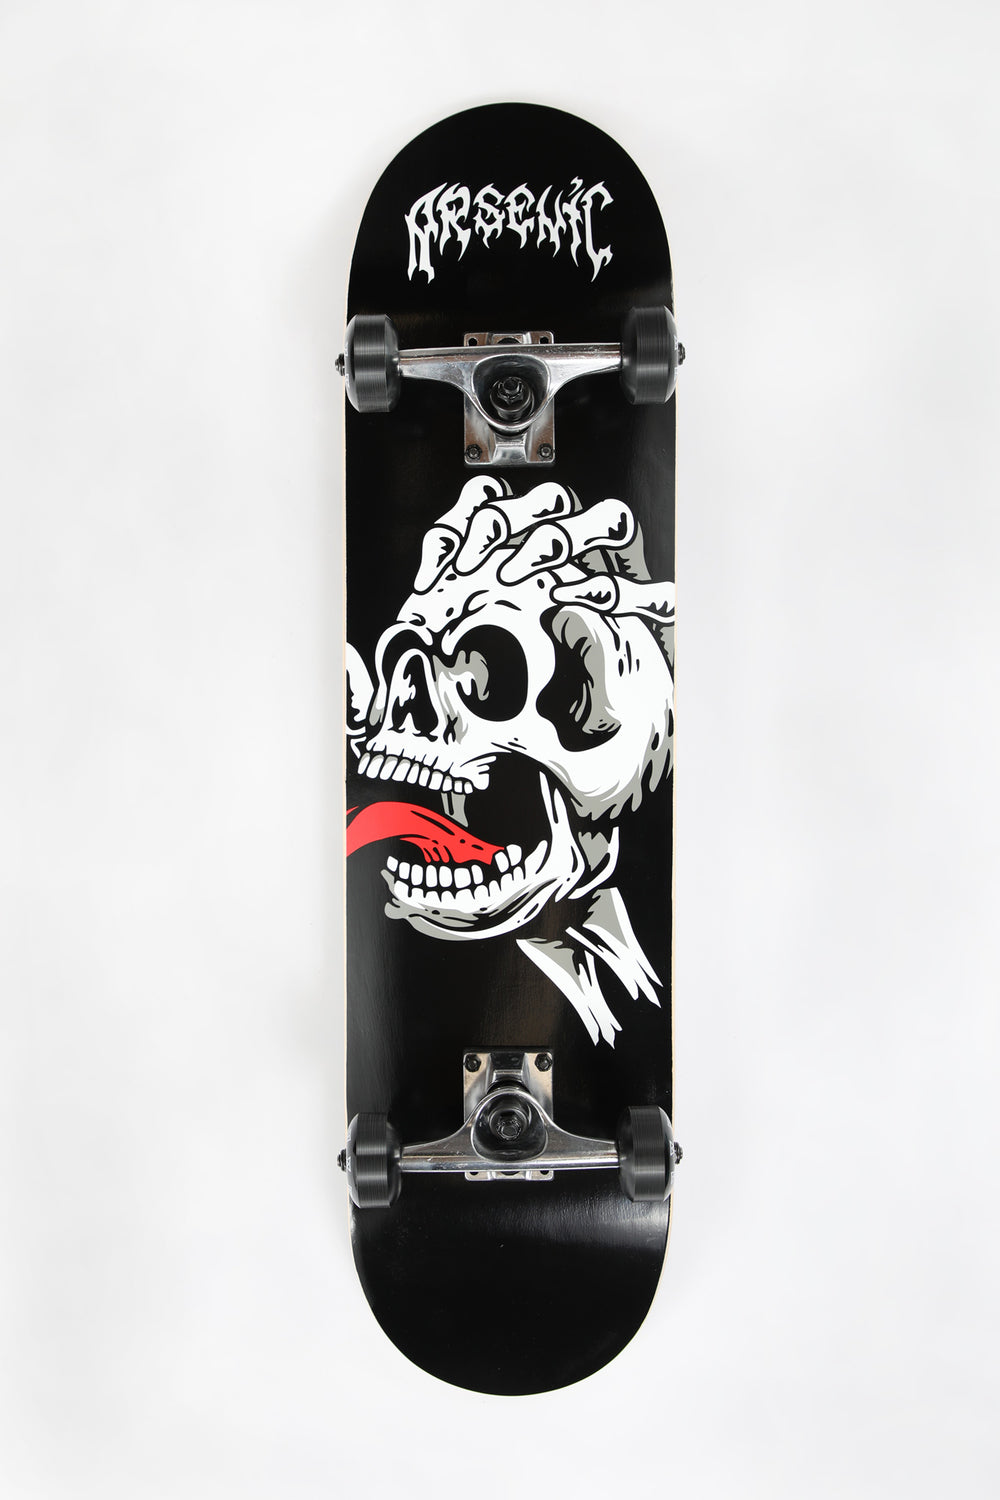 Skateboard Imprimé Squelette Arsenic 7.75